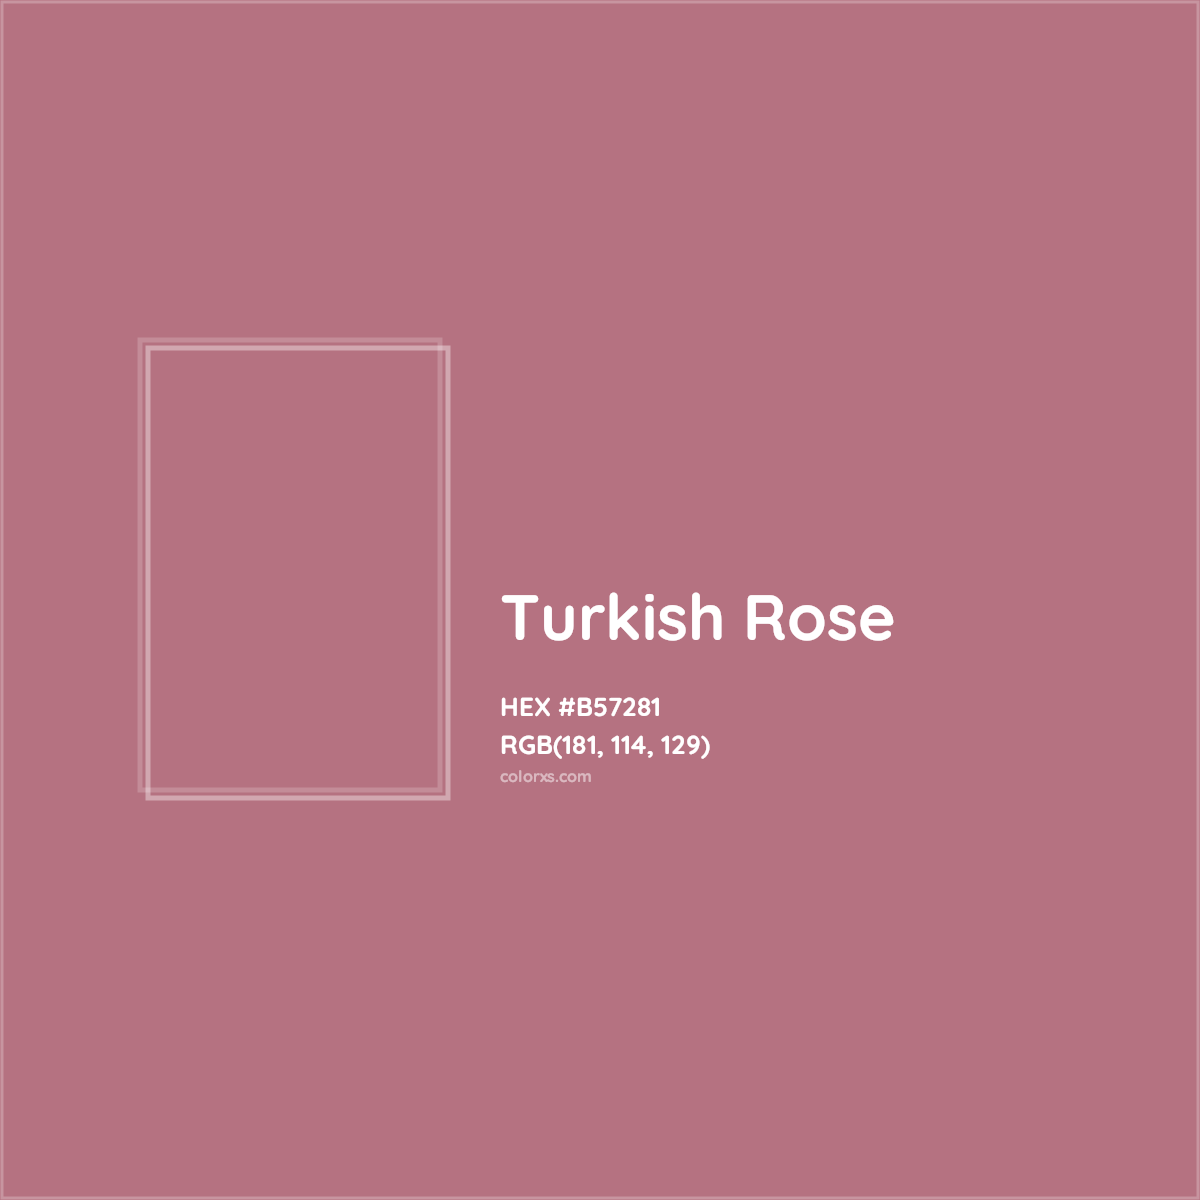 HEX #B57281 Turkish Rose Color - Color Code